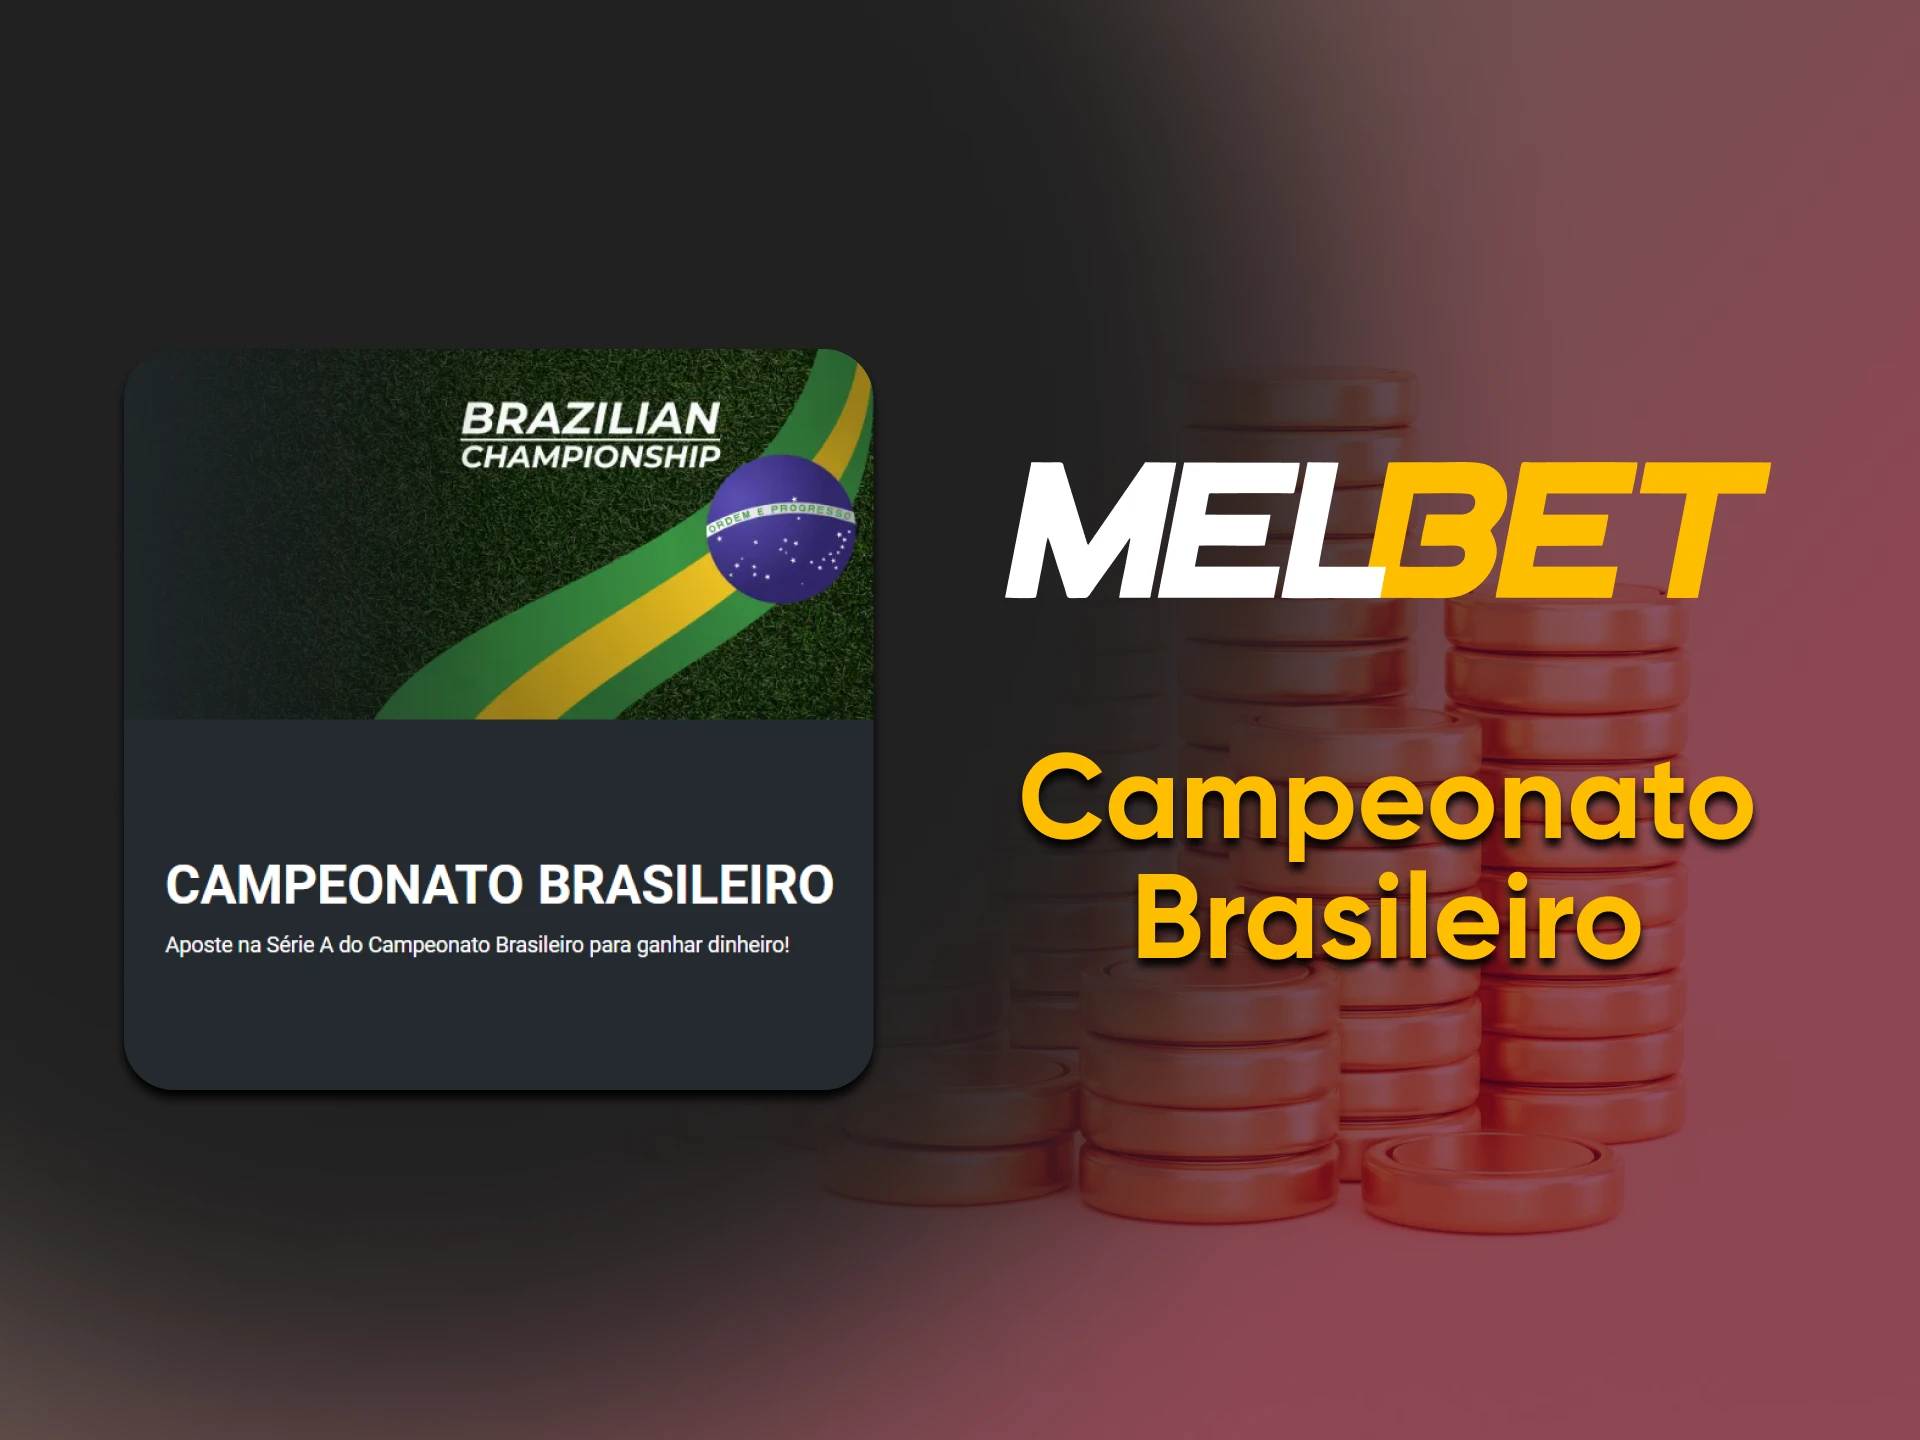 The Melbet website has a bonus for the Brazilian Championship.